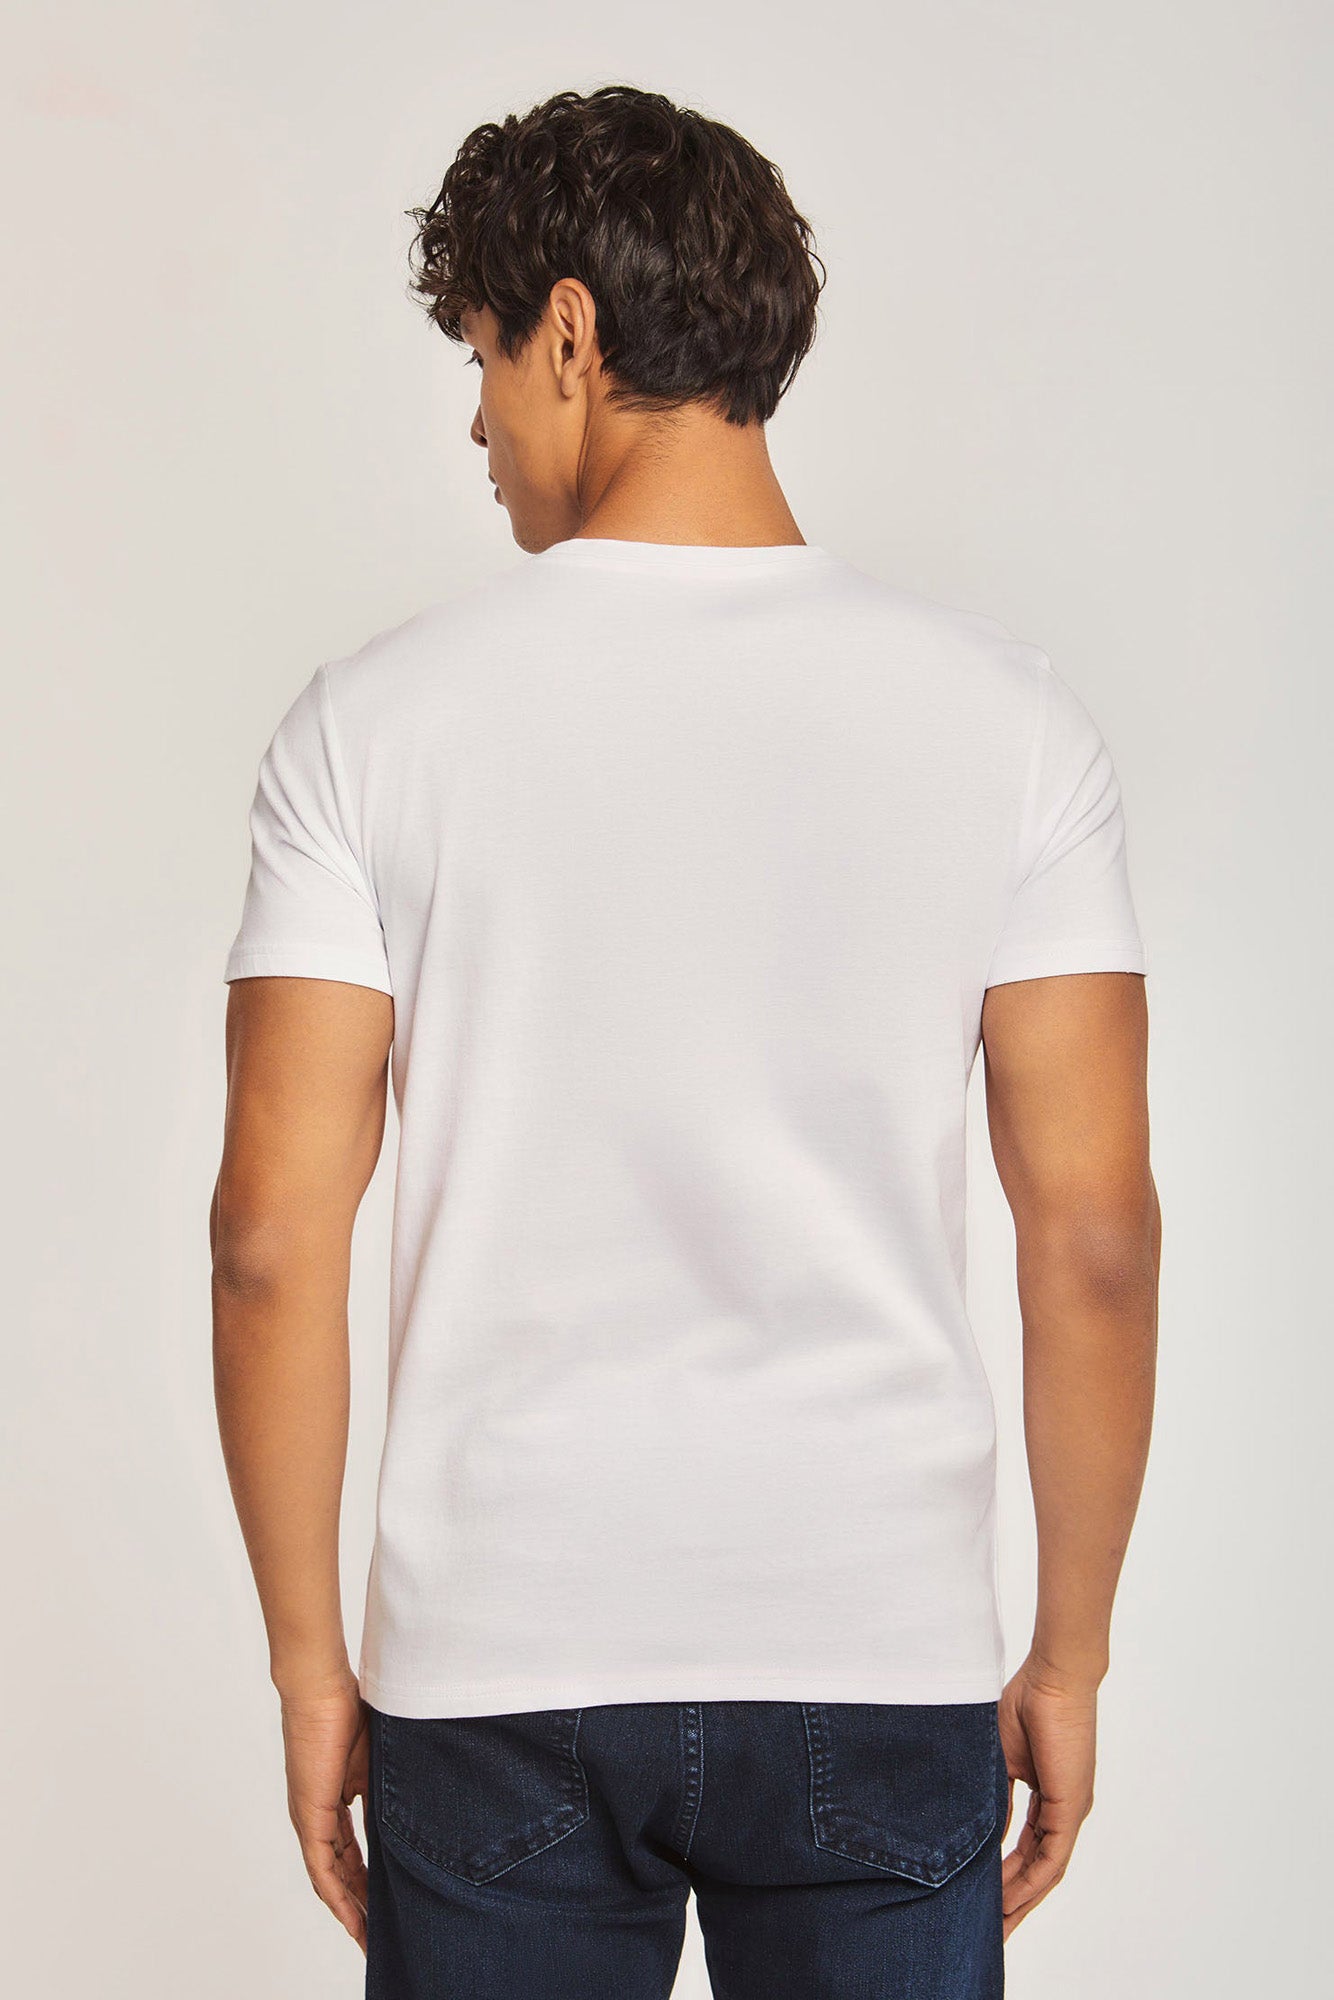 T-Shirt - Half Sleeve - Printed